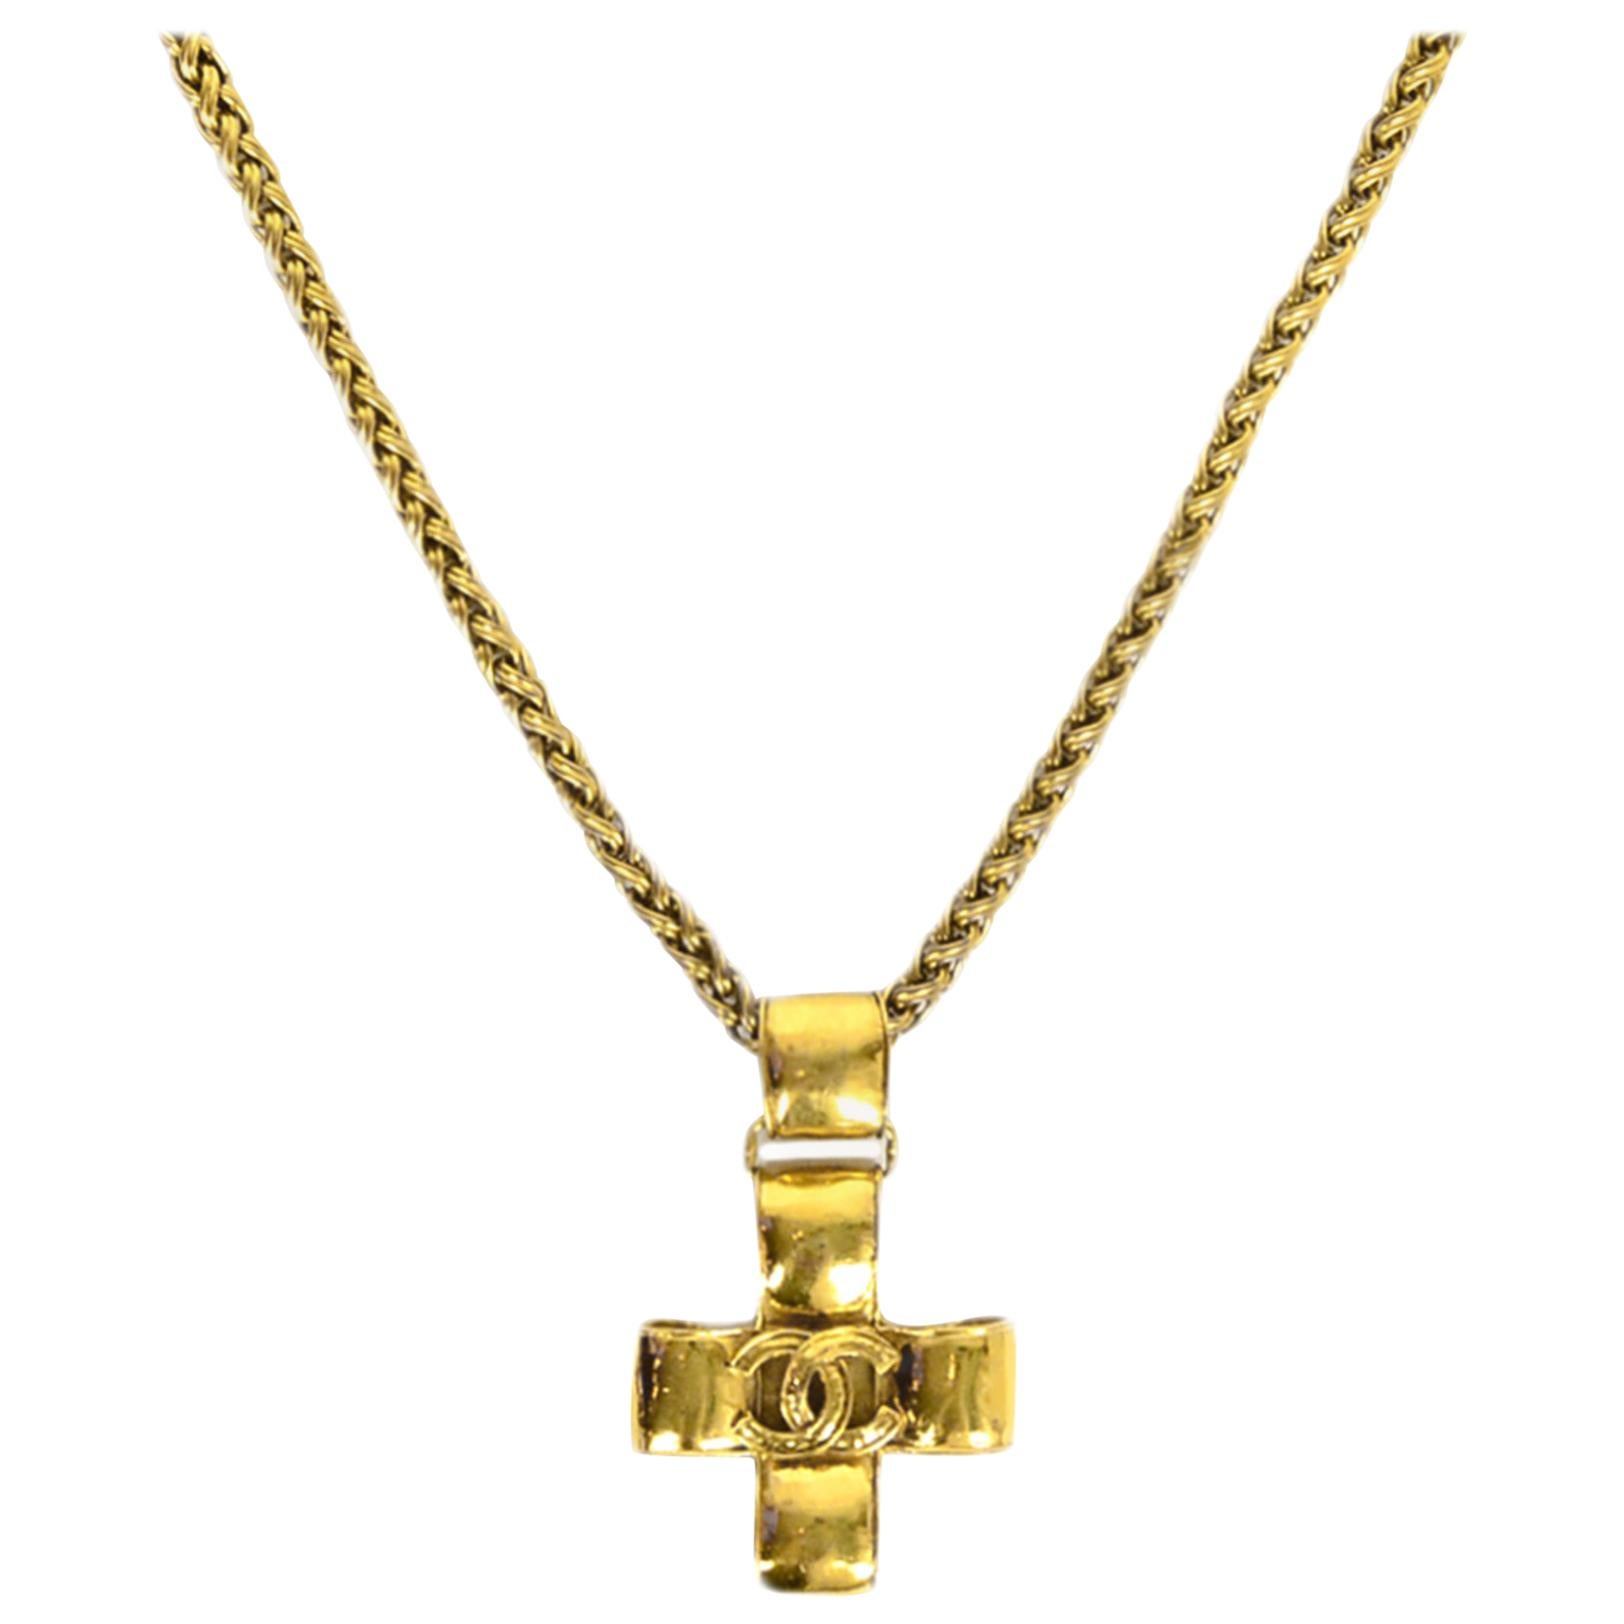 Chanel 1990s Vintage Goldtone Chainlink Necklace with CC Cross Pendant 